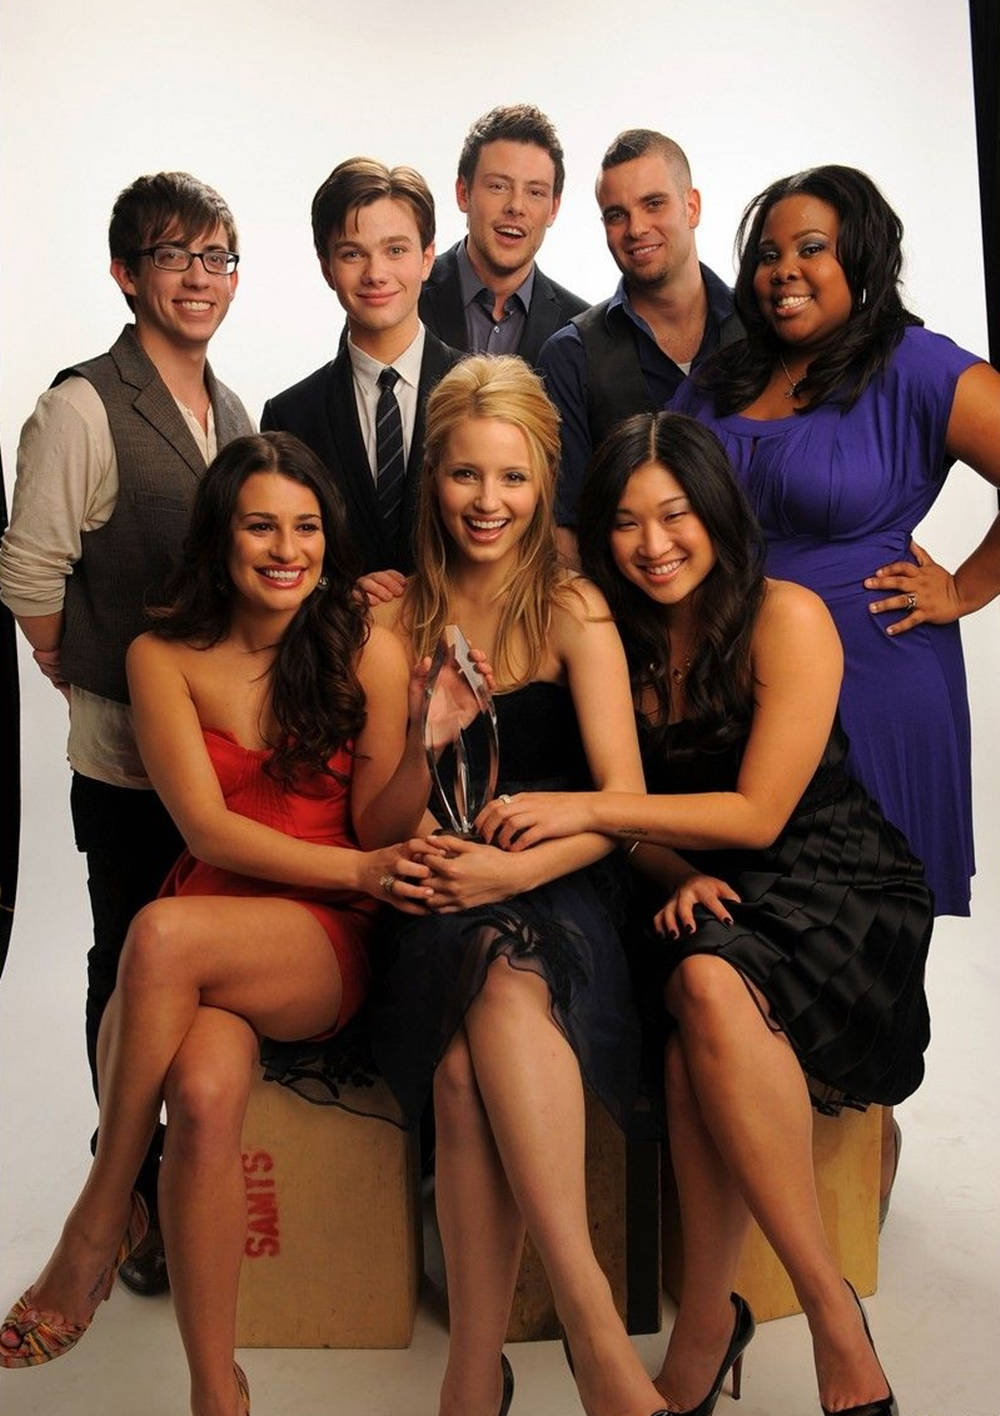 Glee Cast Members 2010 People’s Choice Awards Portrait Wallpaper